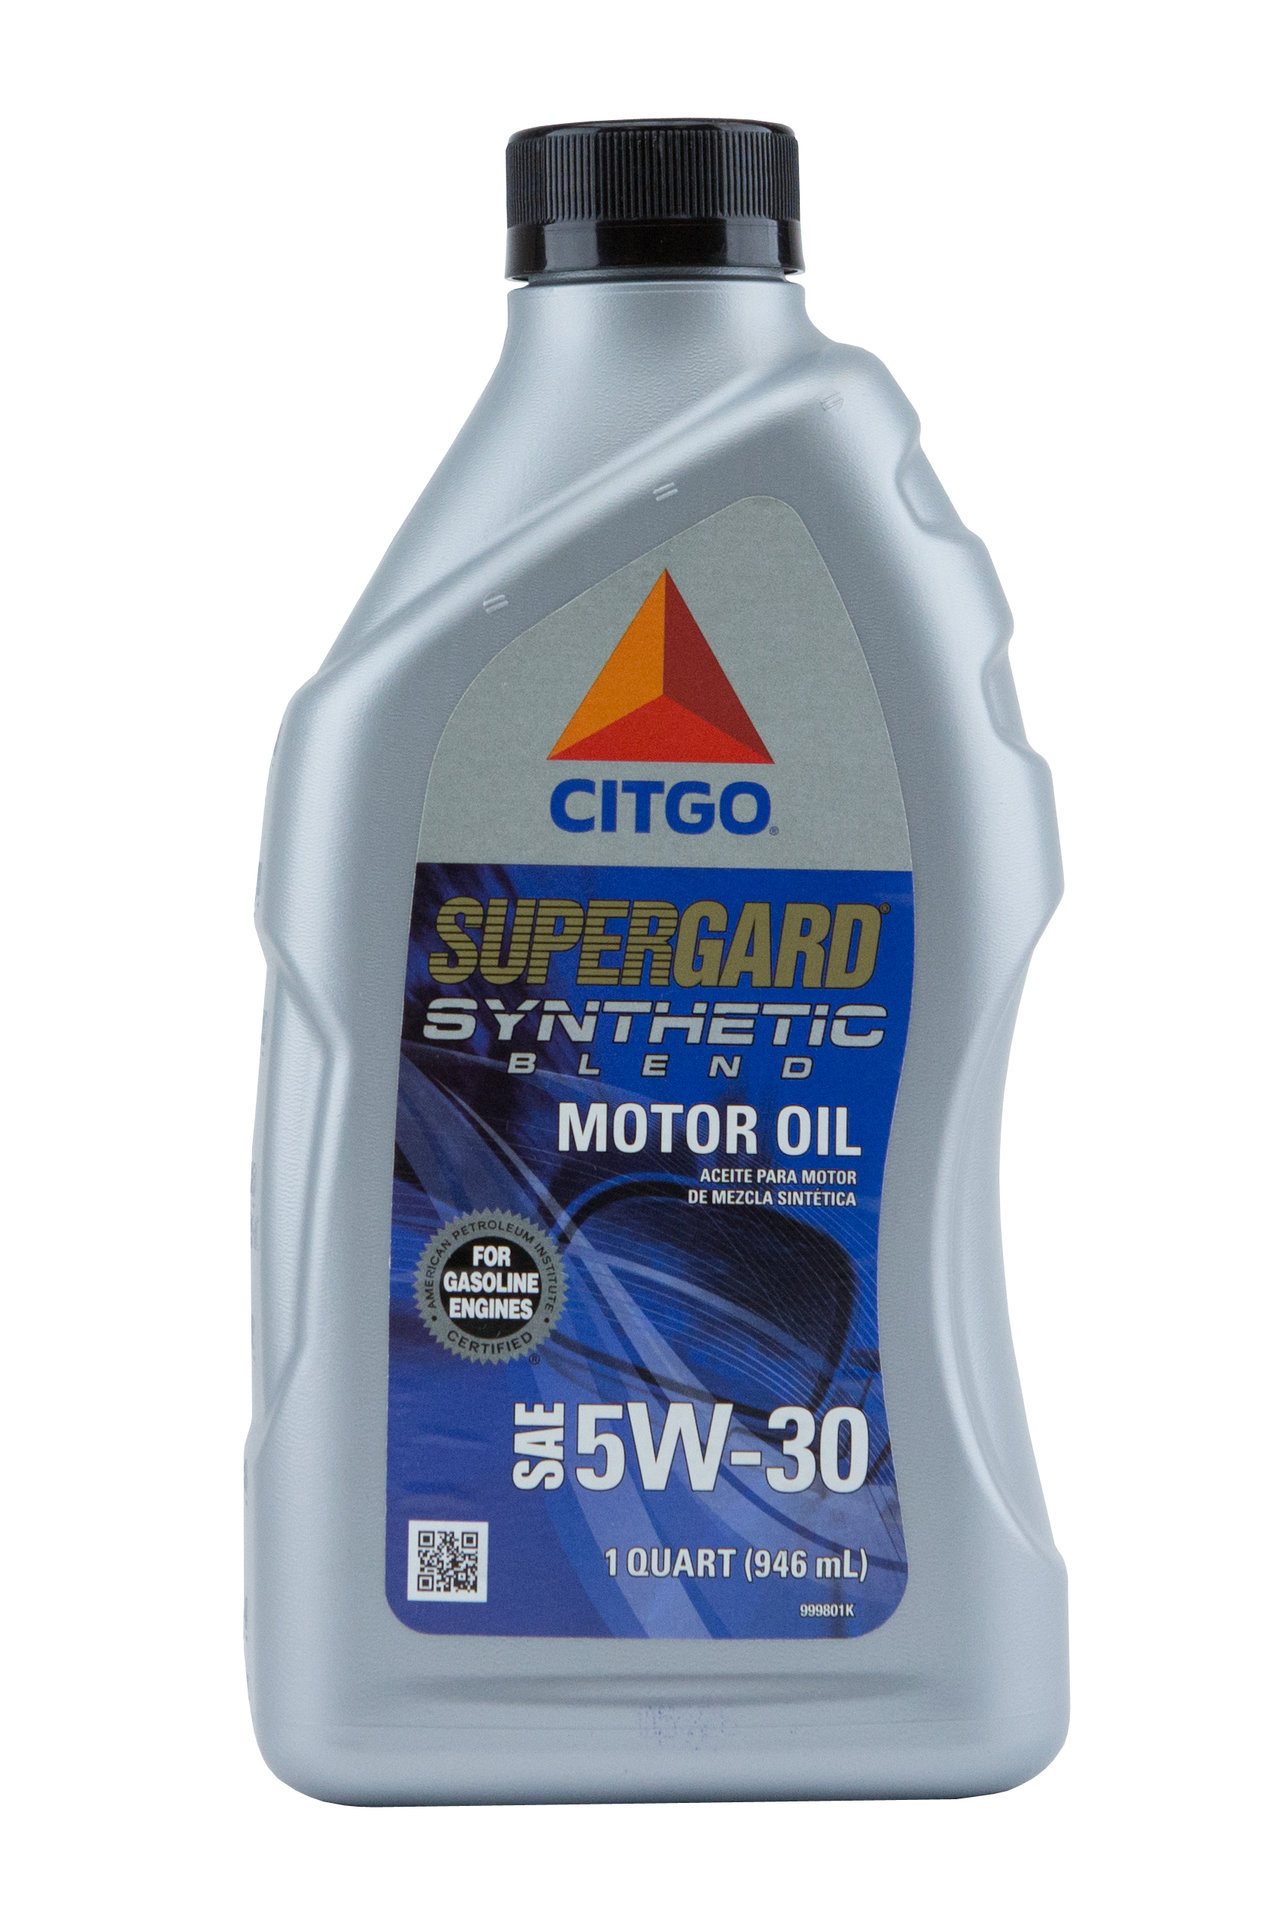 buy-citgo-supergard-5w30-motor-oil-12-1-qts-case-online-yoder-oil